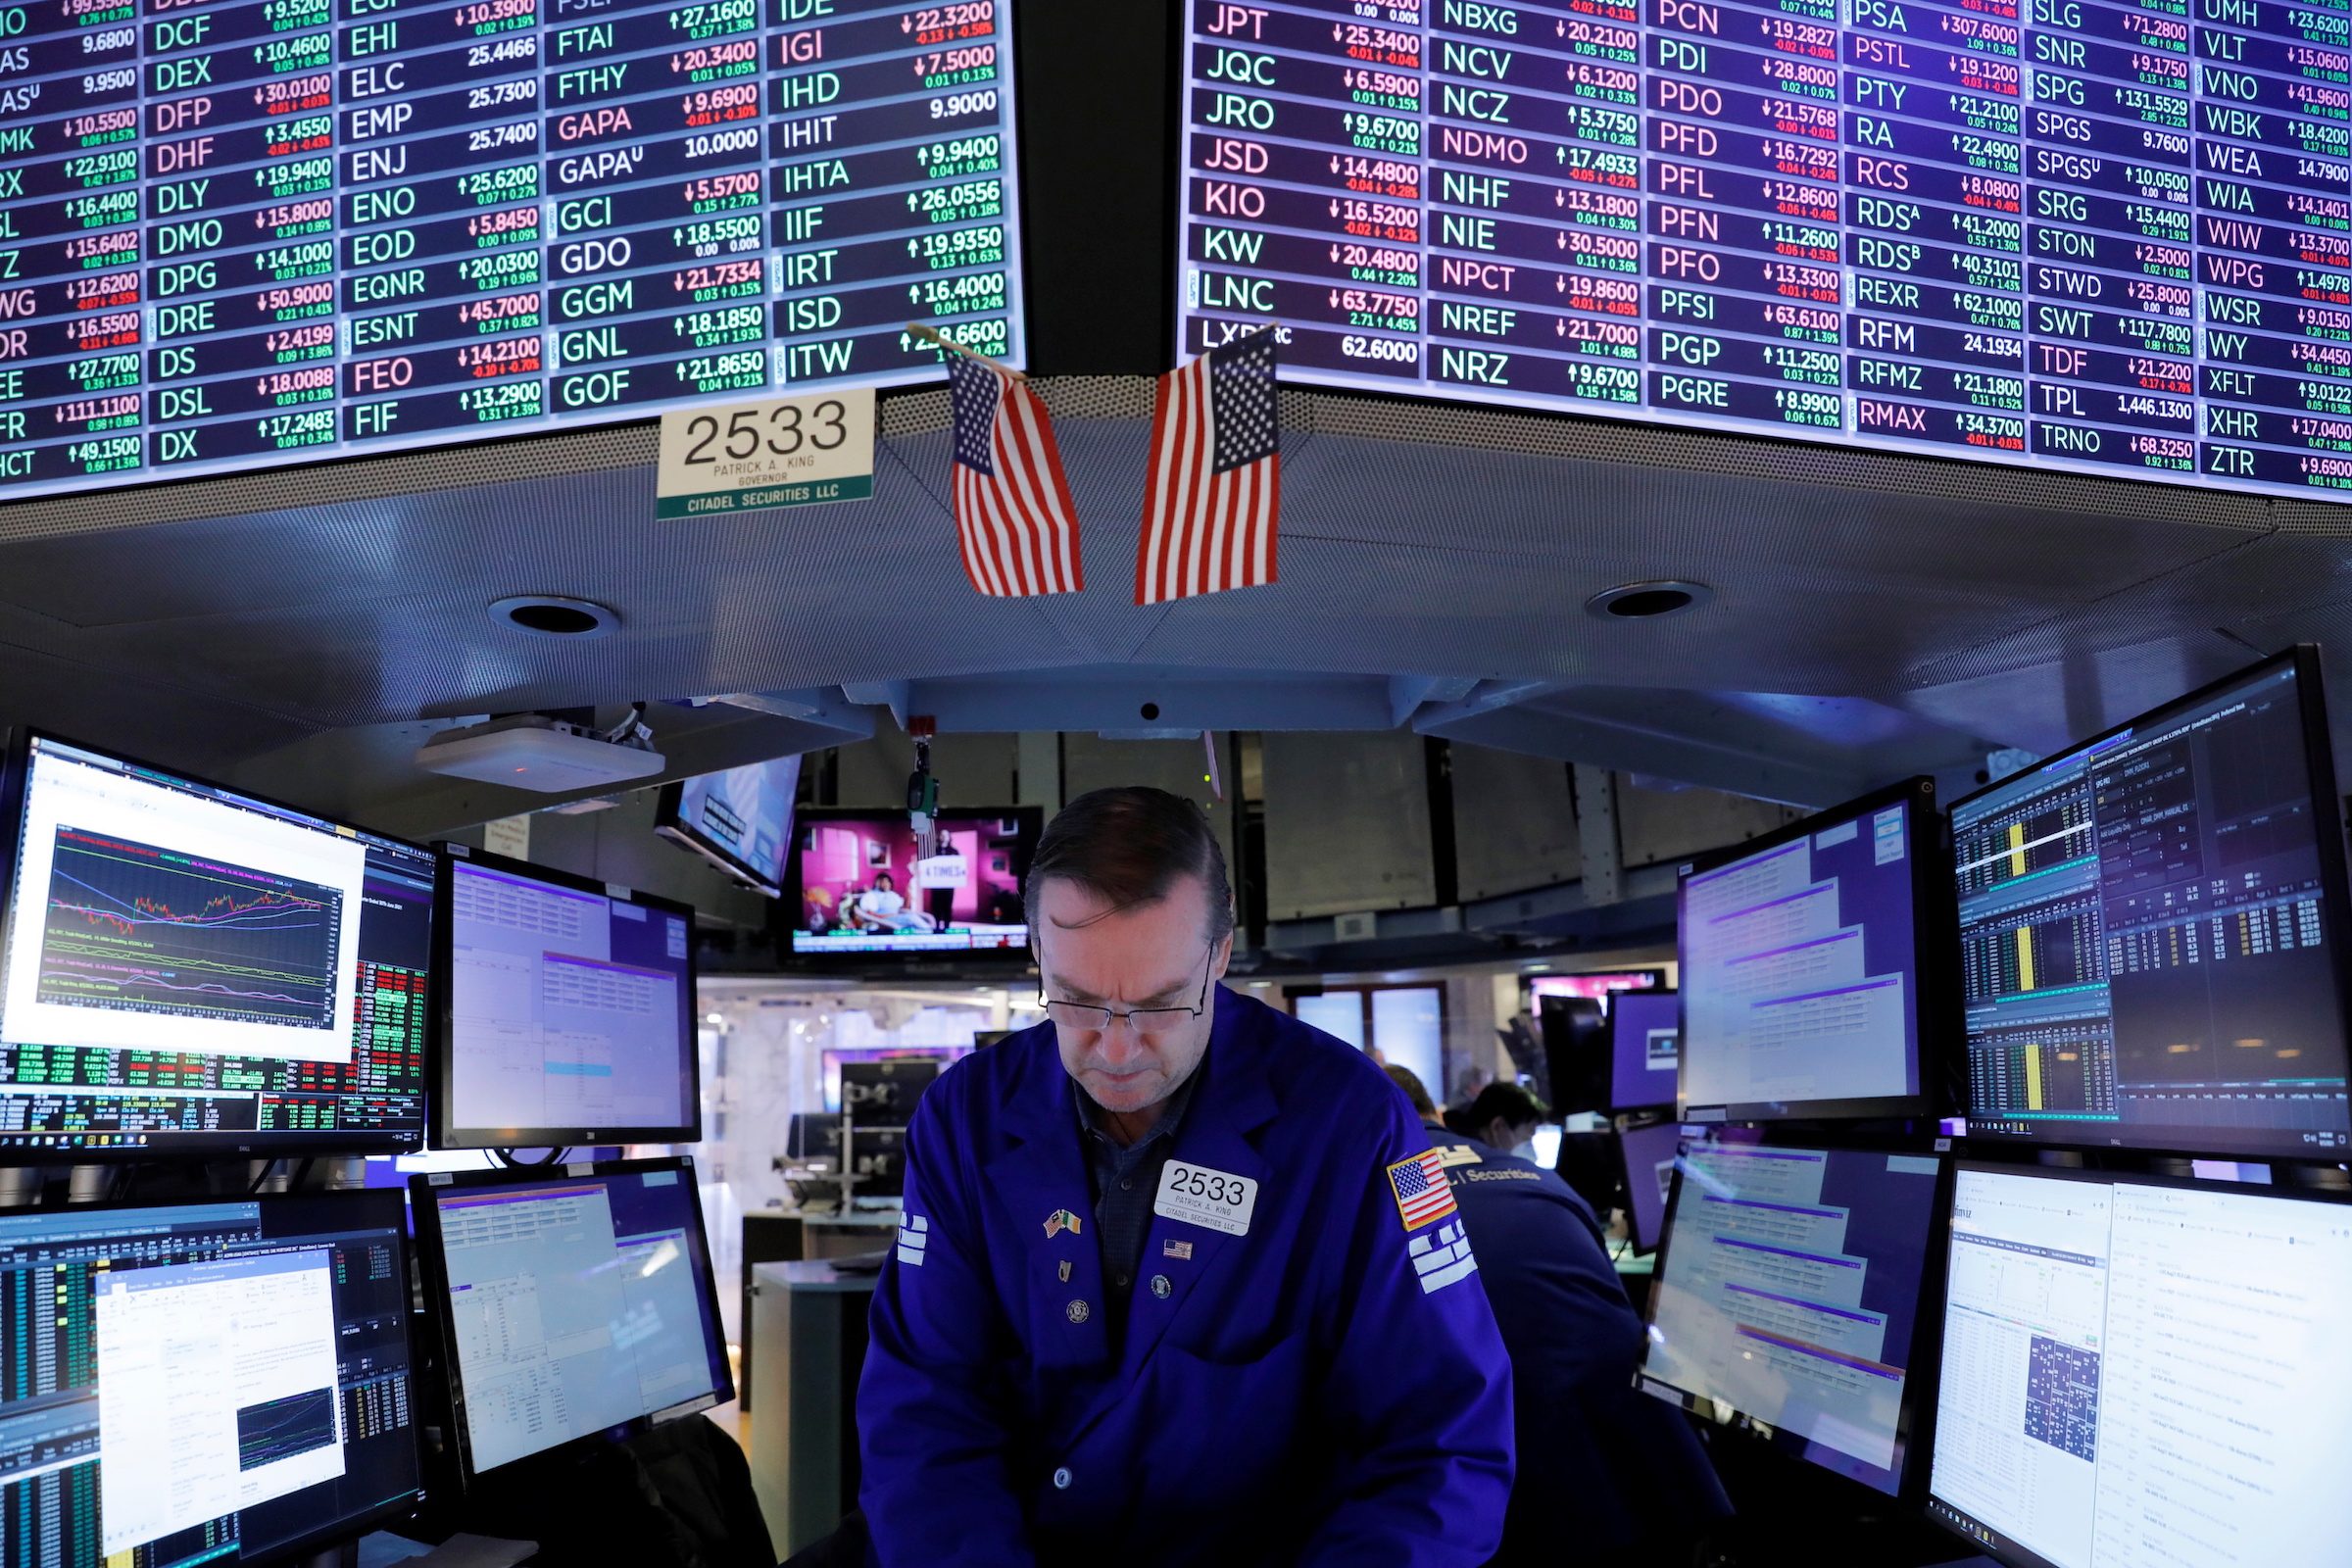 Wall Street retreats from records, US Treasury yields rise